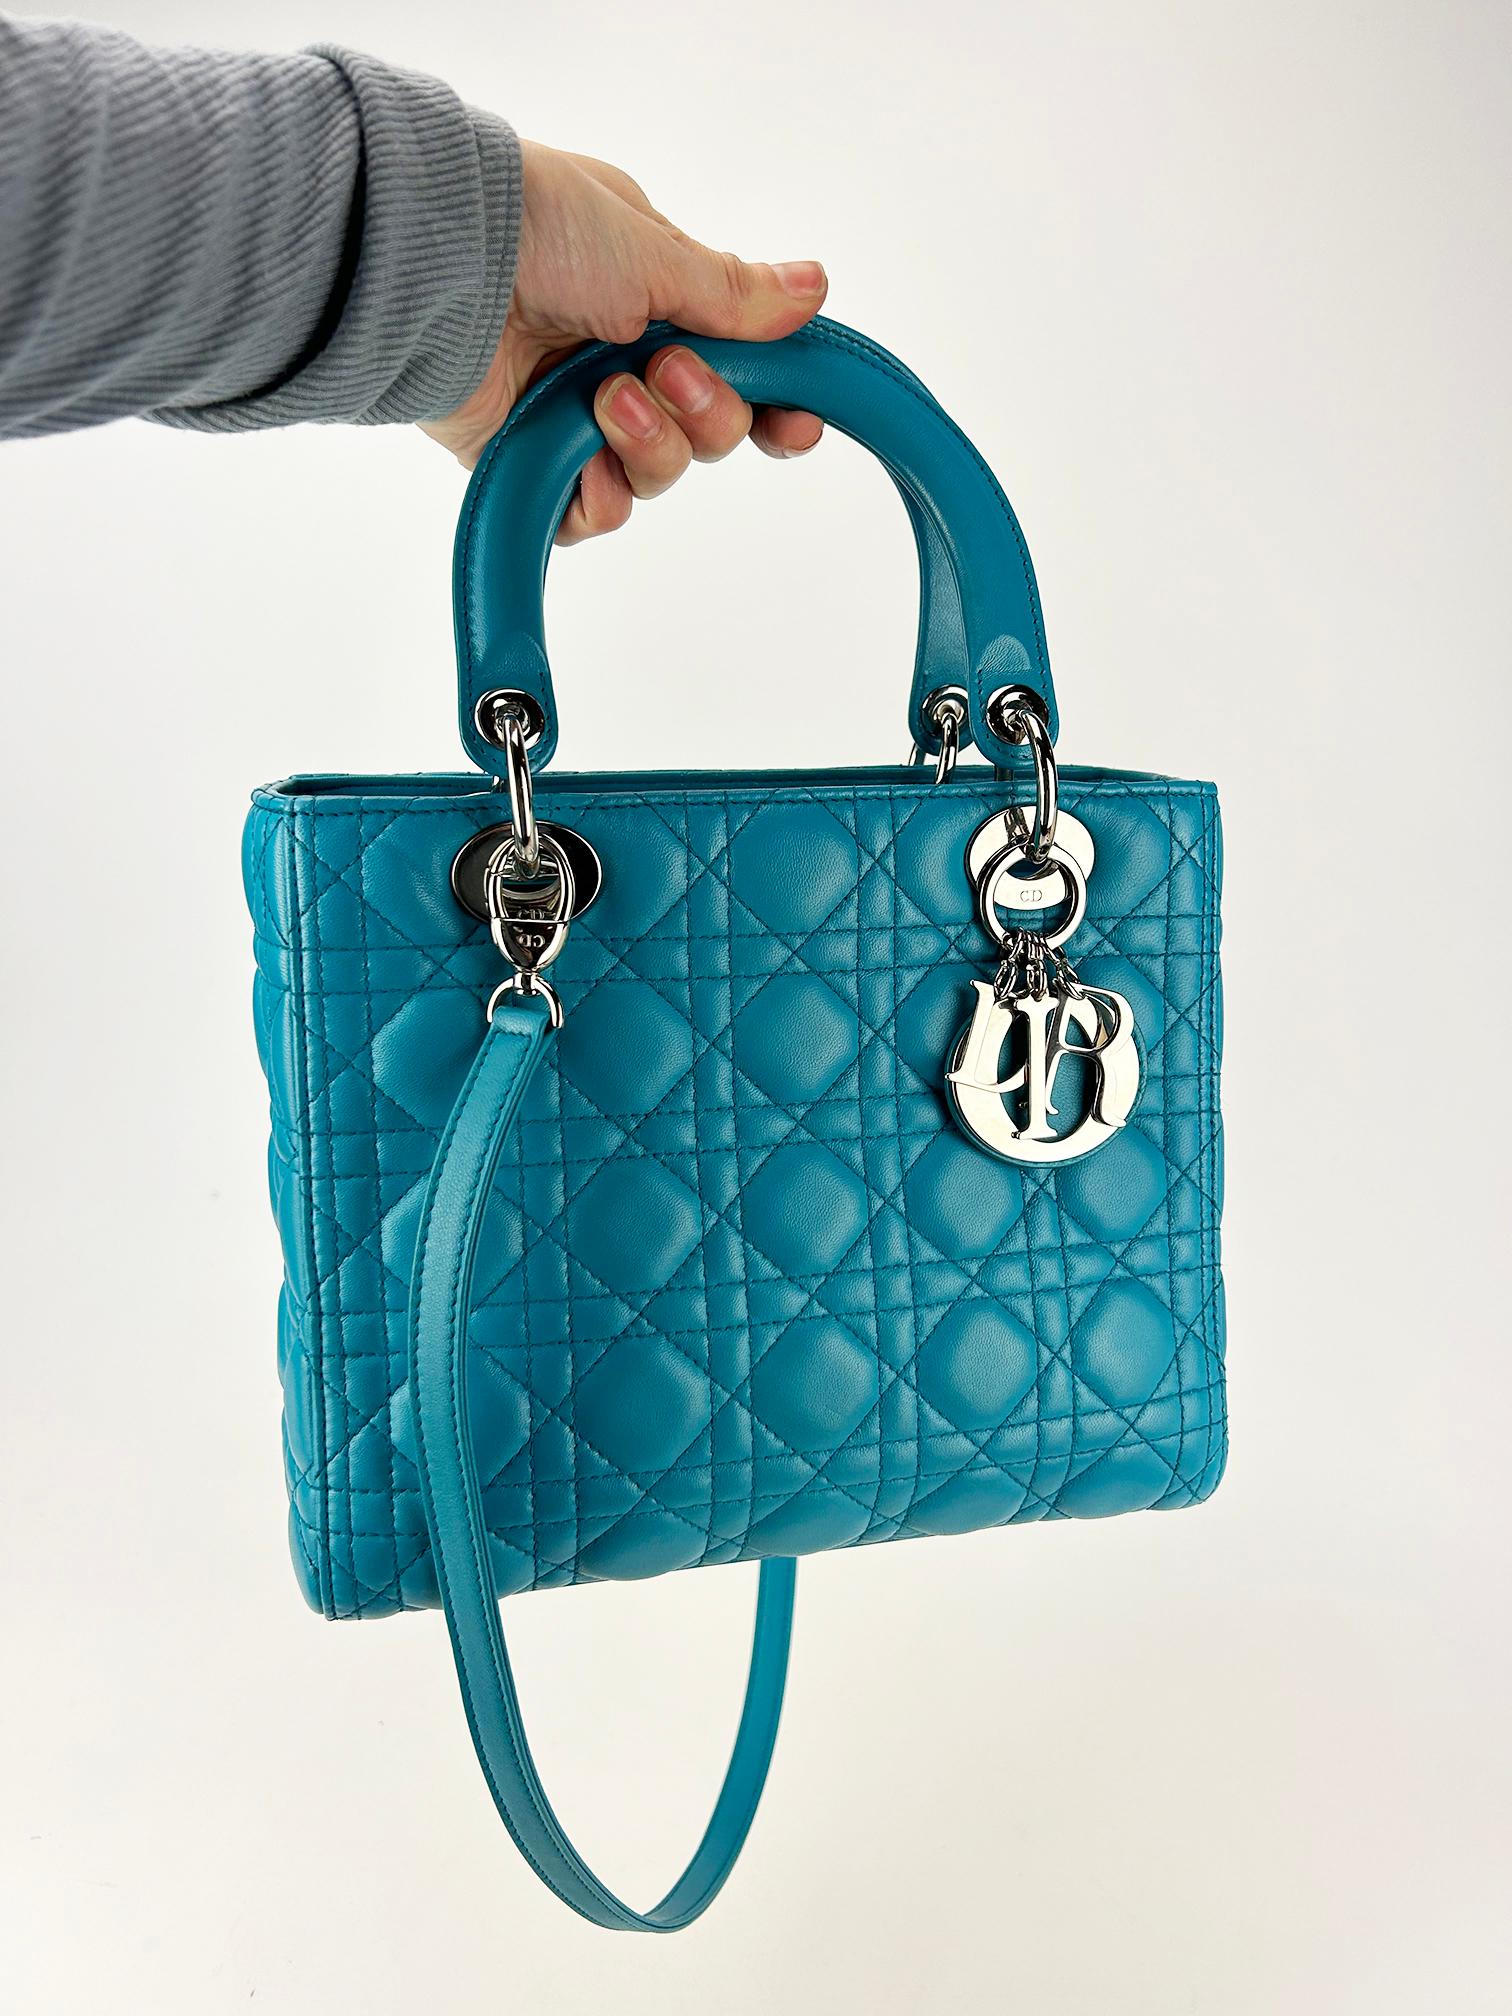 Christian Dior Teal Leather Cannage Medium Lady Di Bag For Sale 12